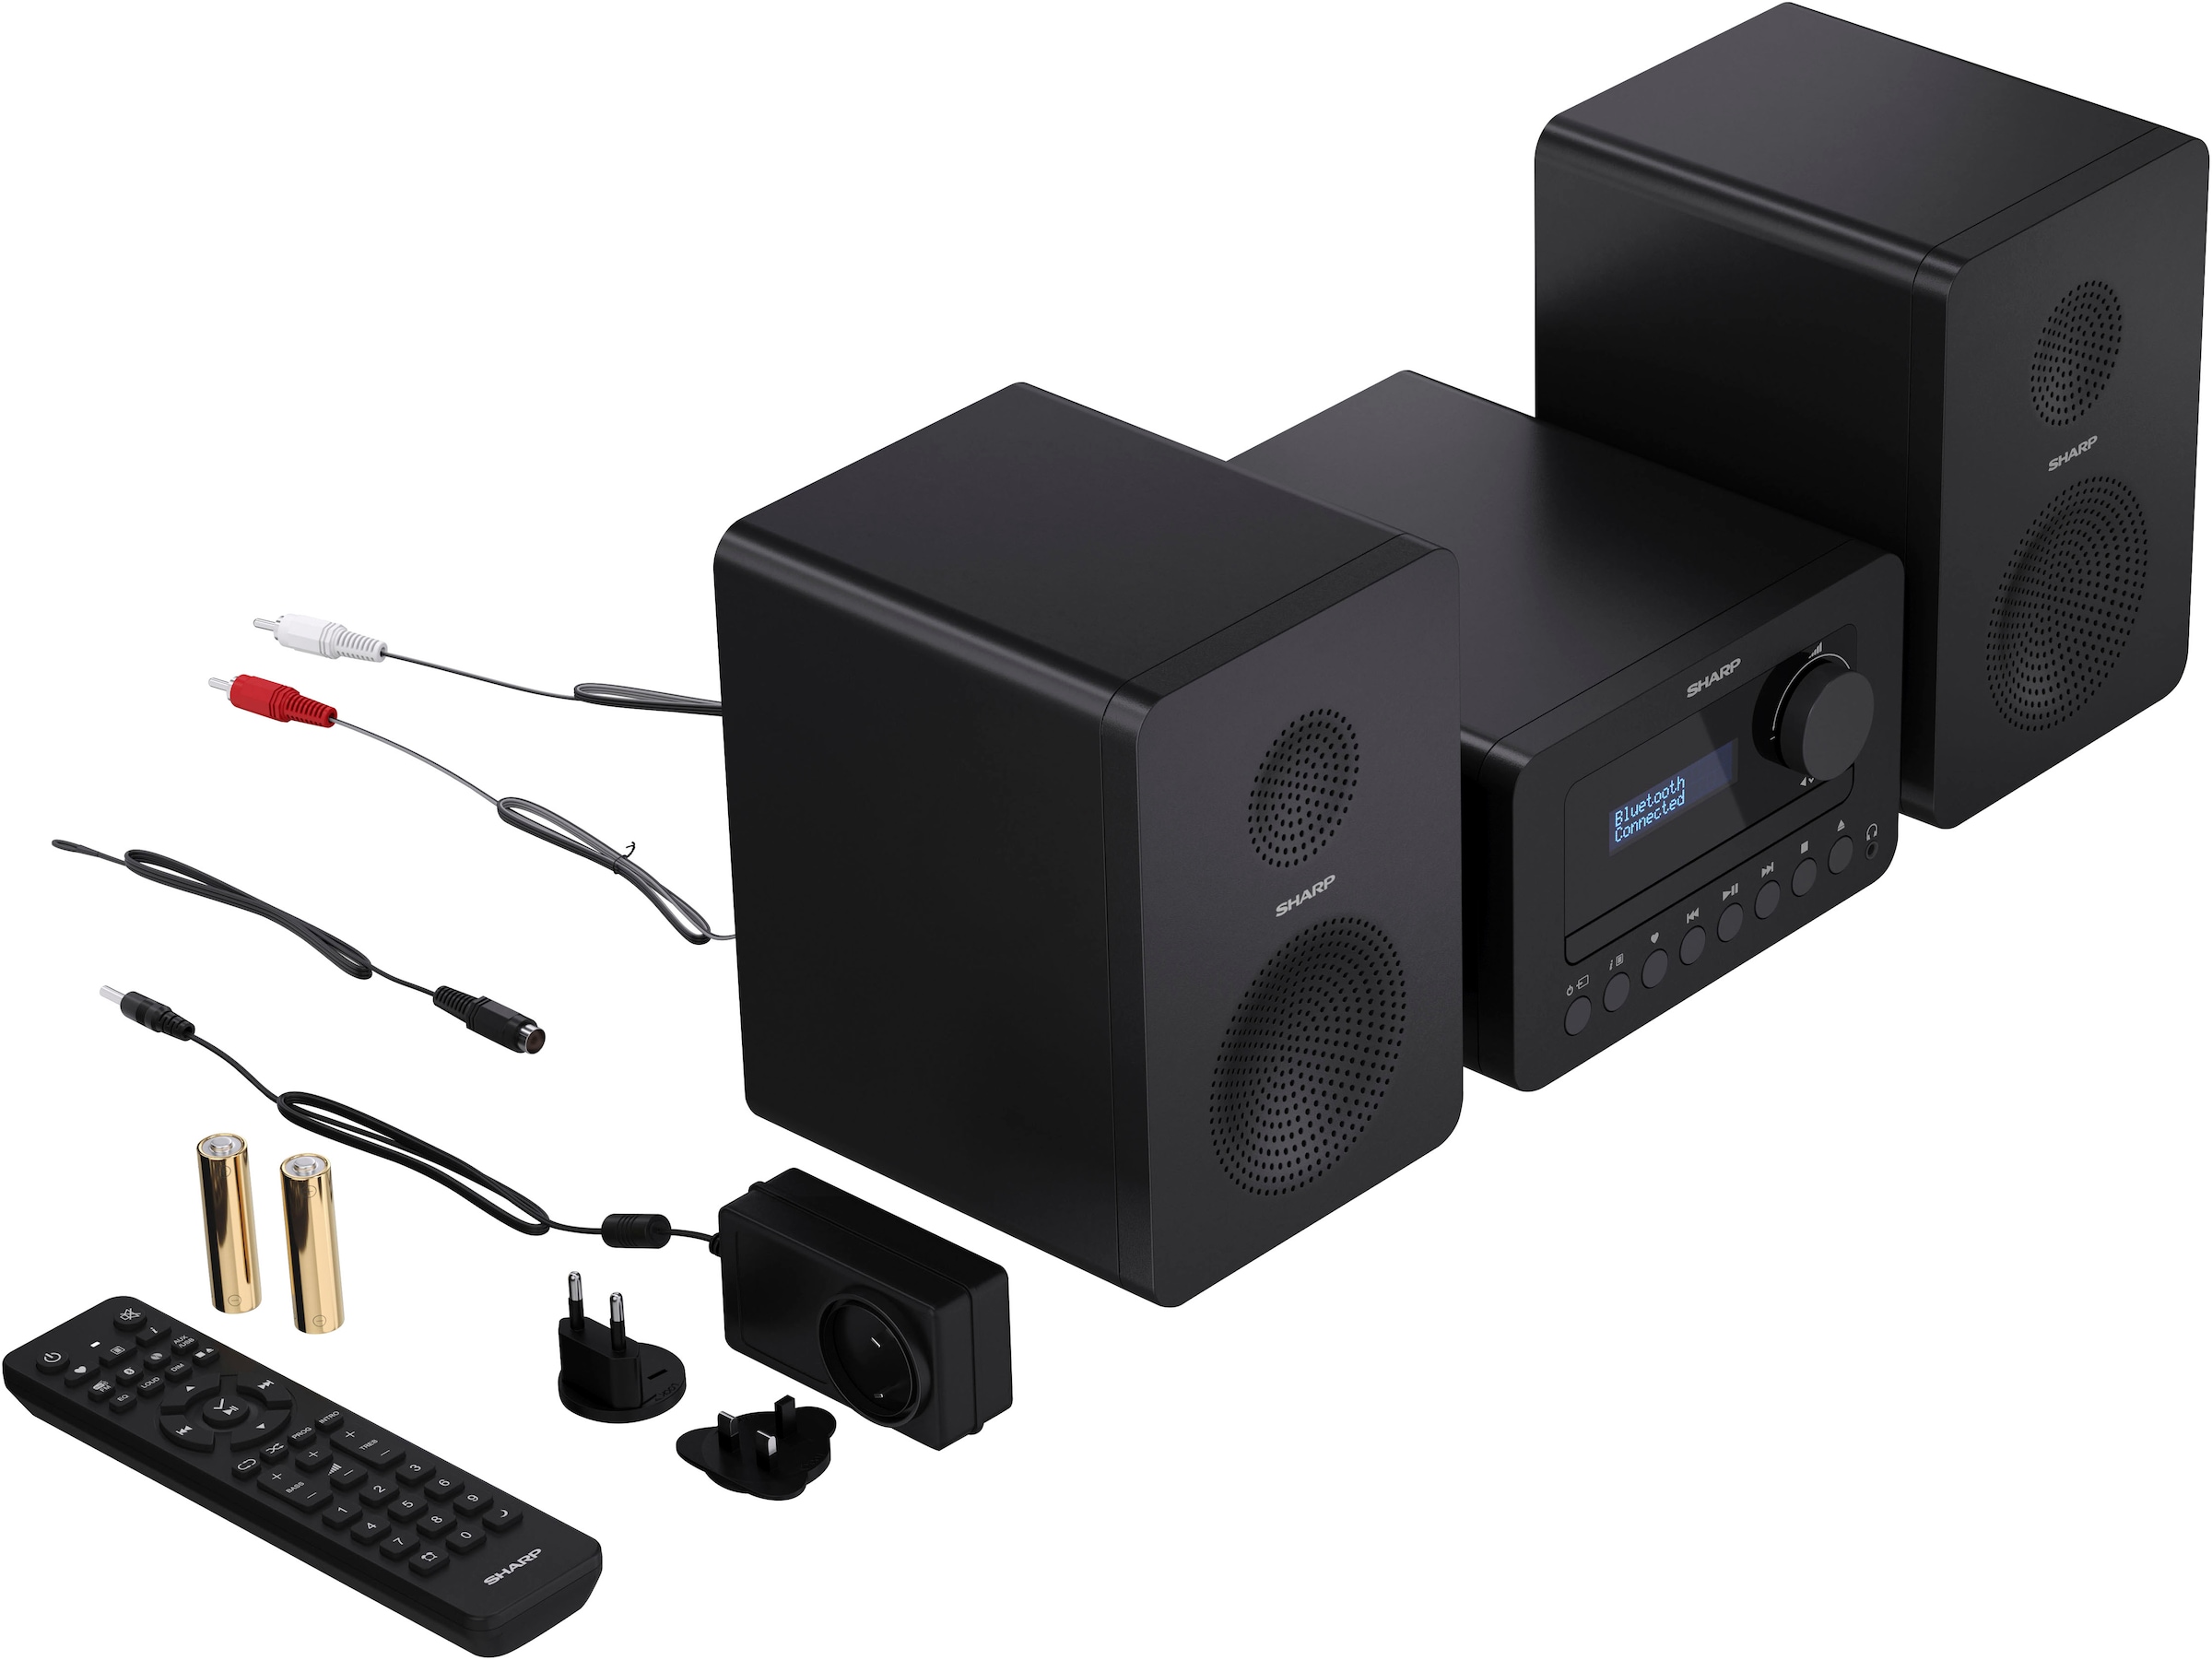 Sharp Audio-System »XL-B520D(BK)«